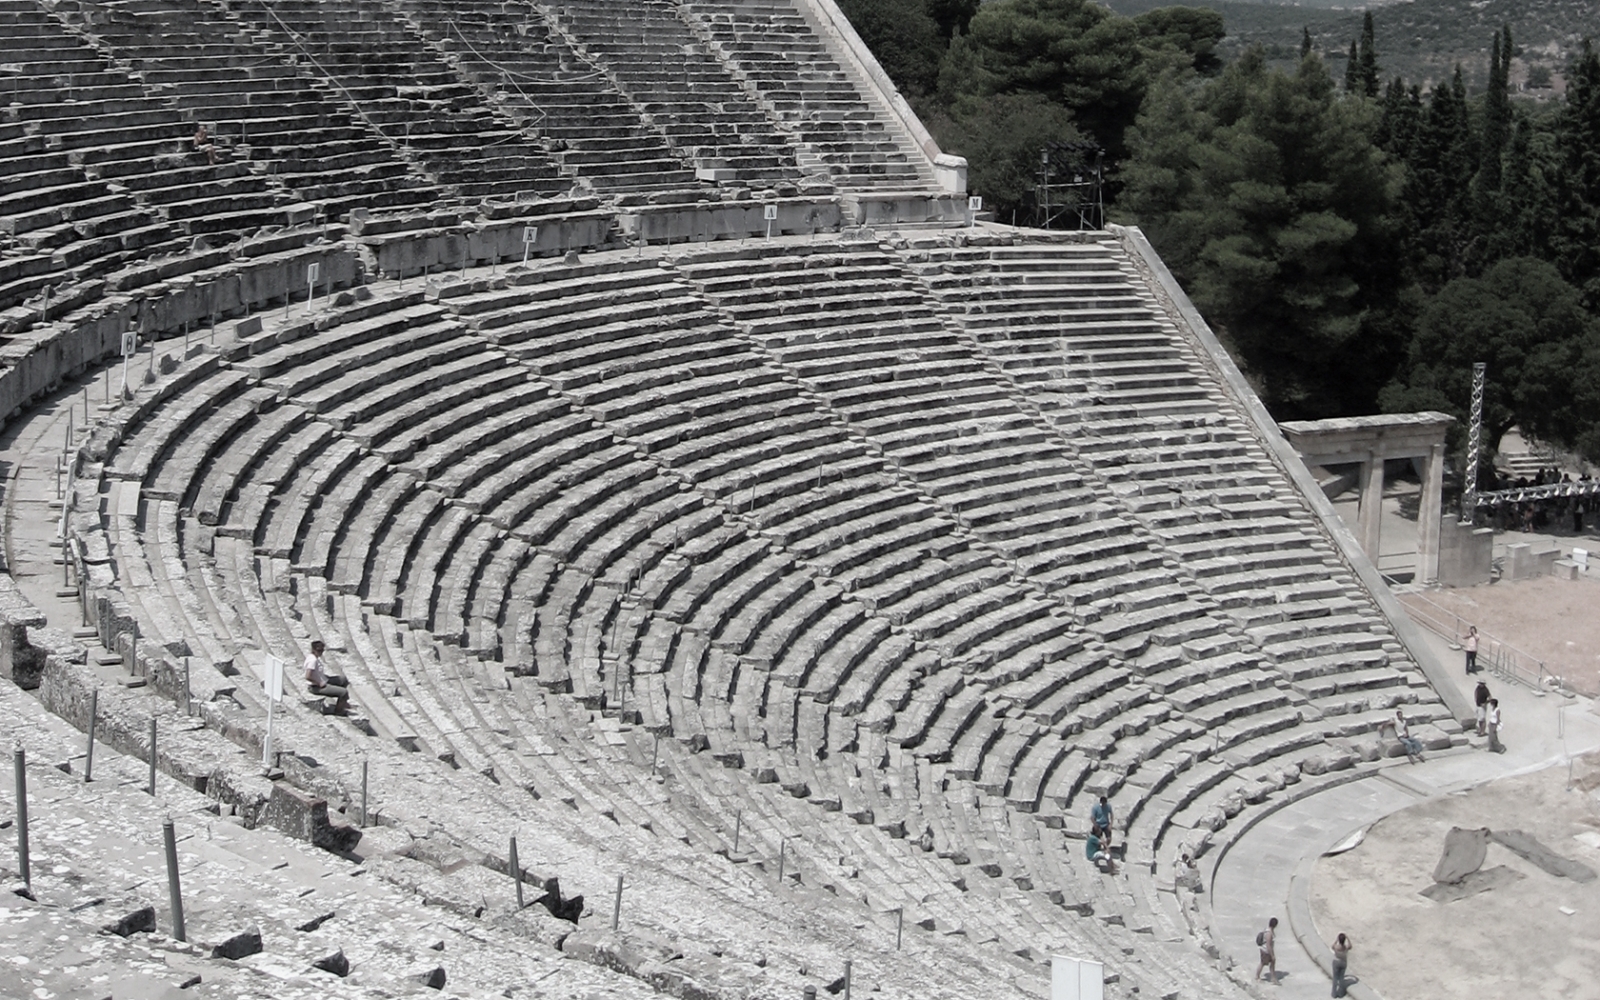 Epidavros Antic Theatre (60km)